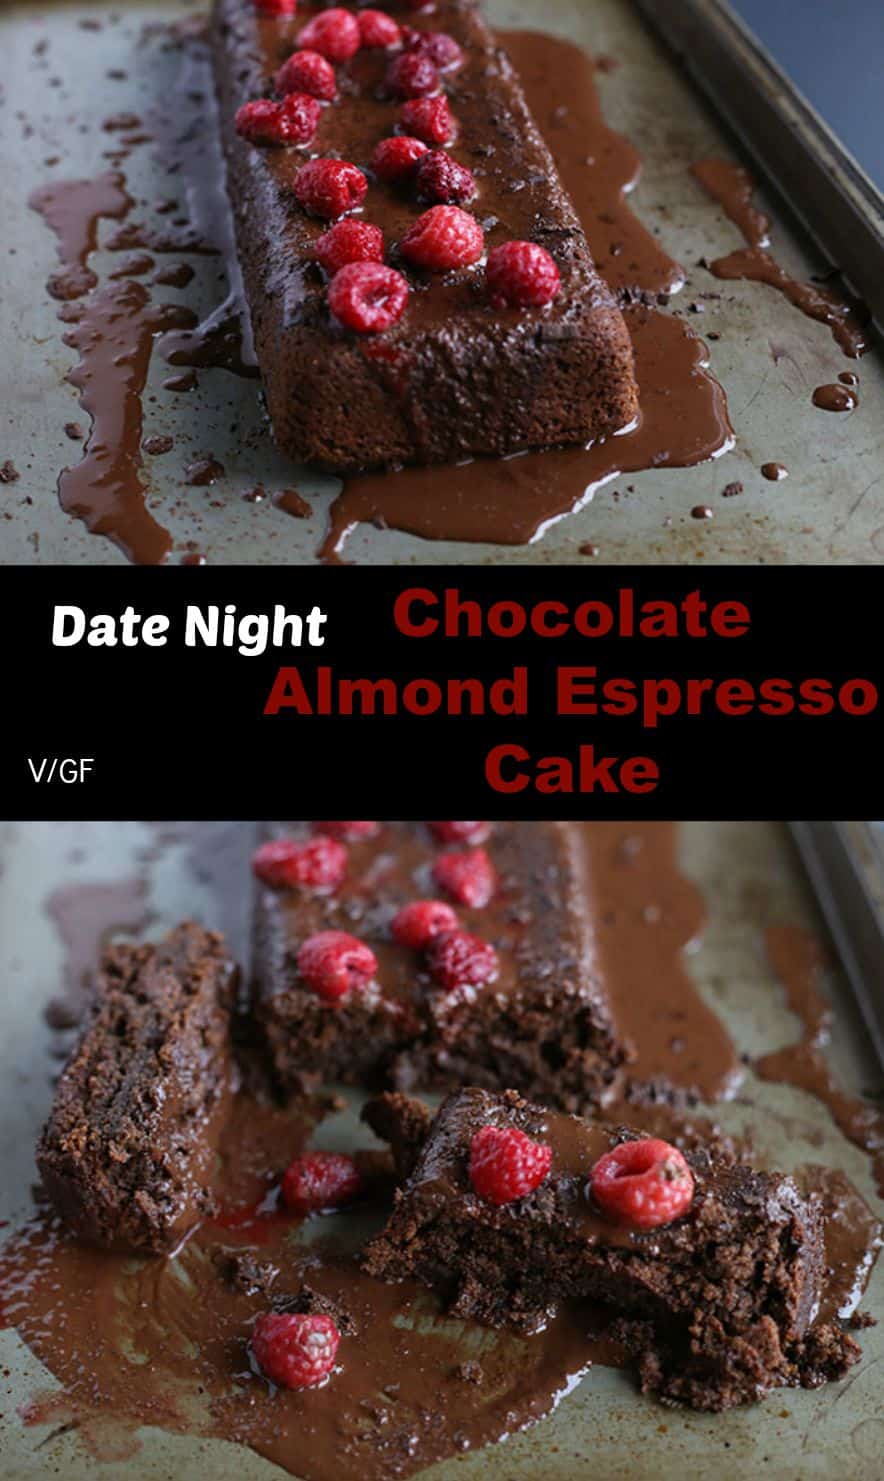 Date Night Chocolate Almond Espresso Cake